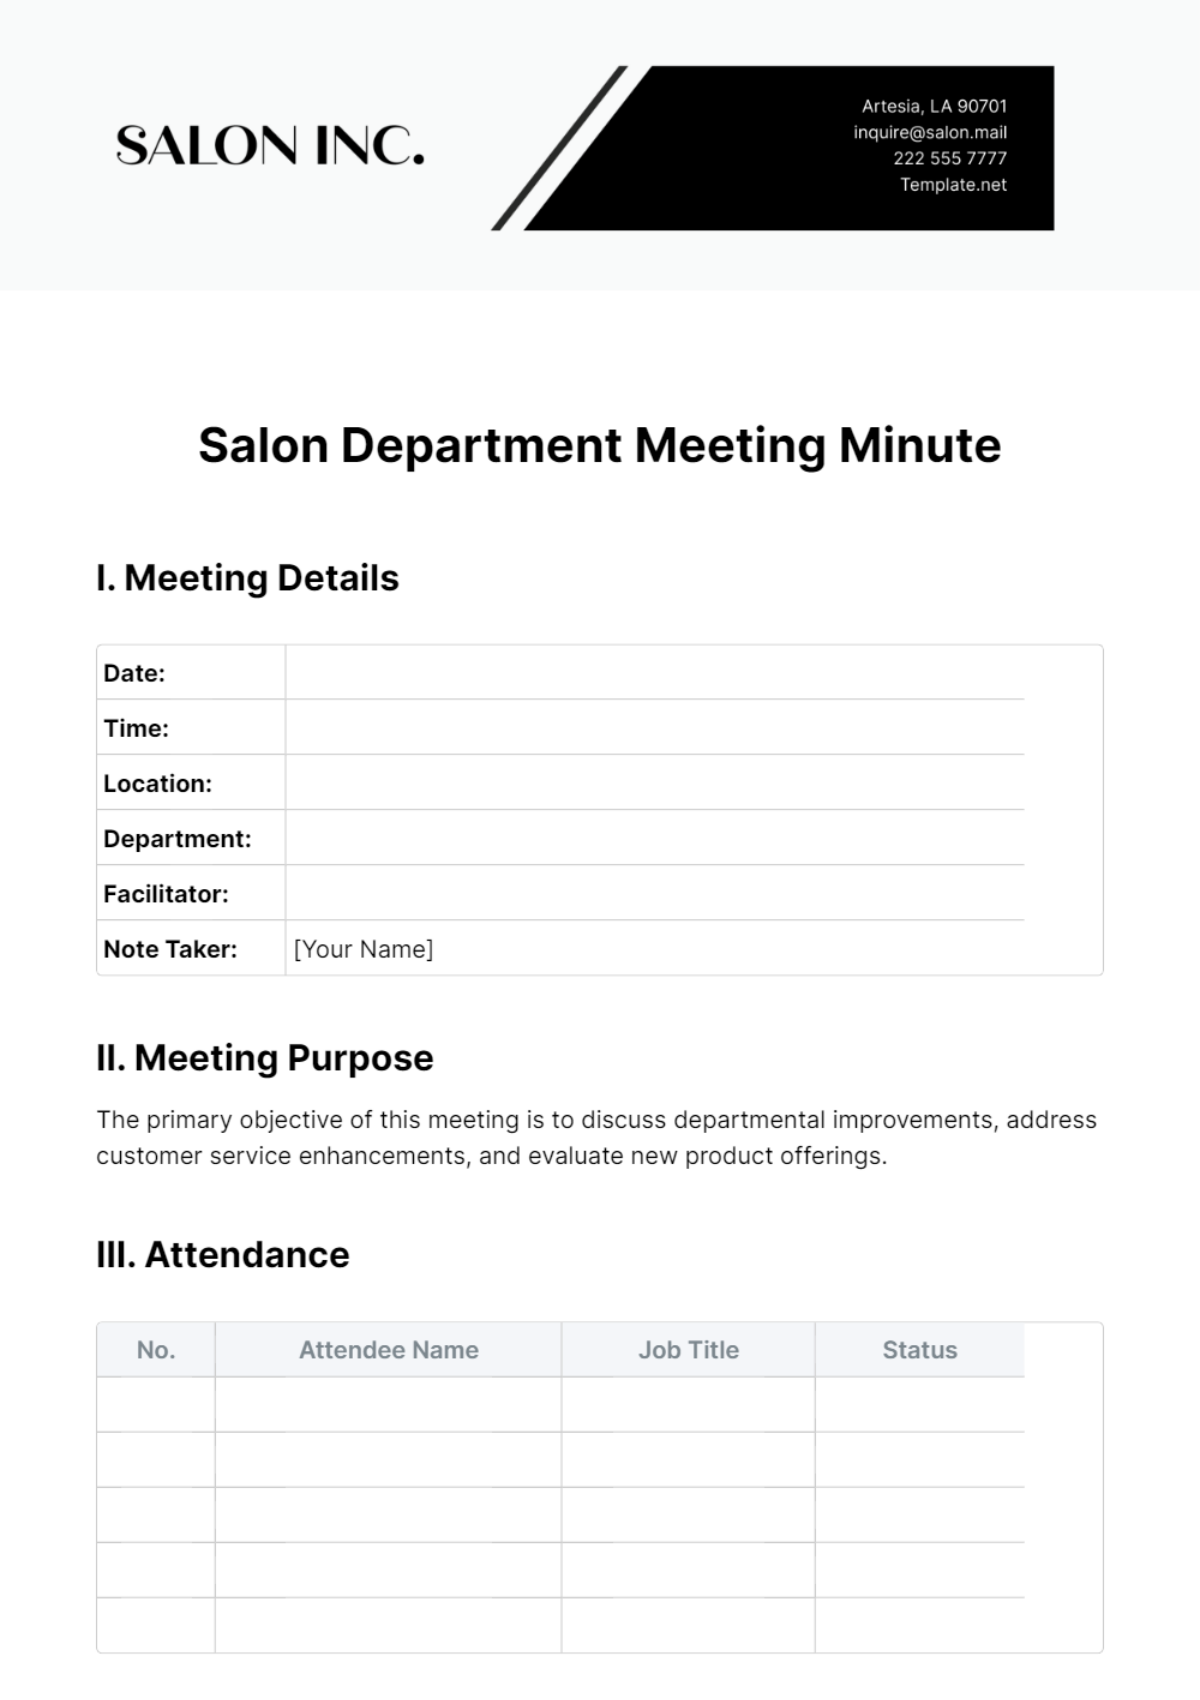 Salon Department Meeting Minute Template